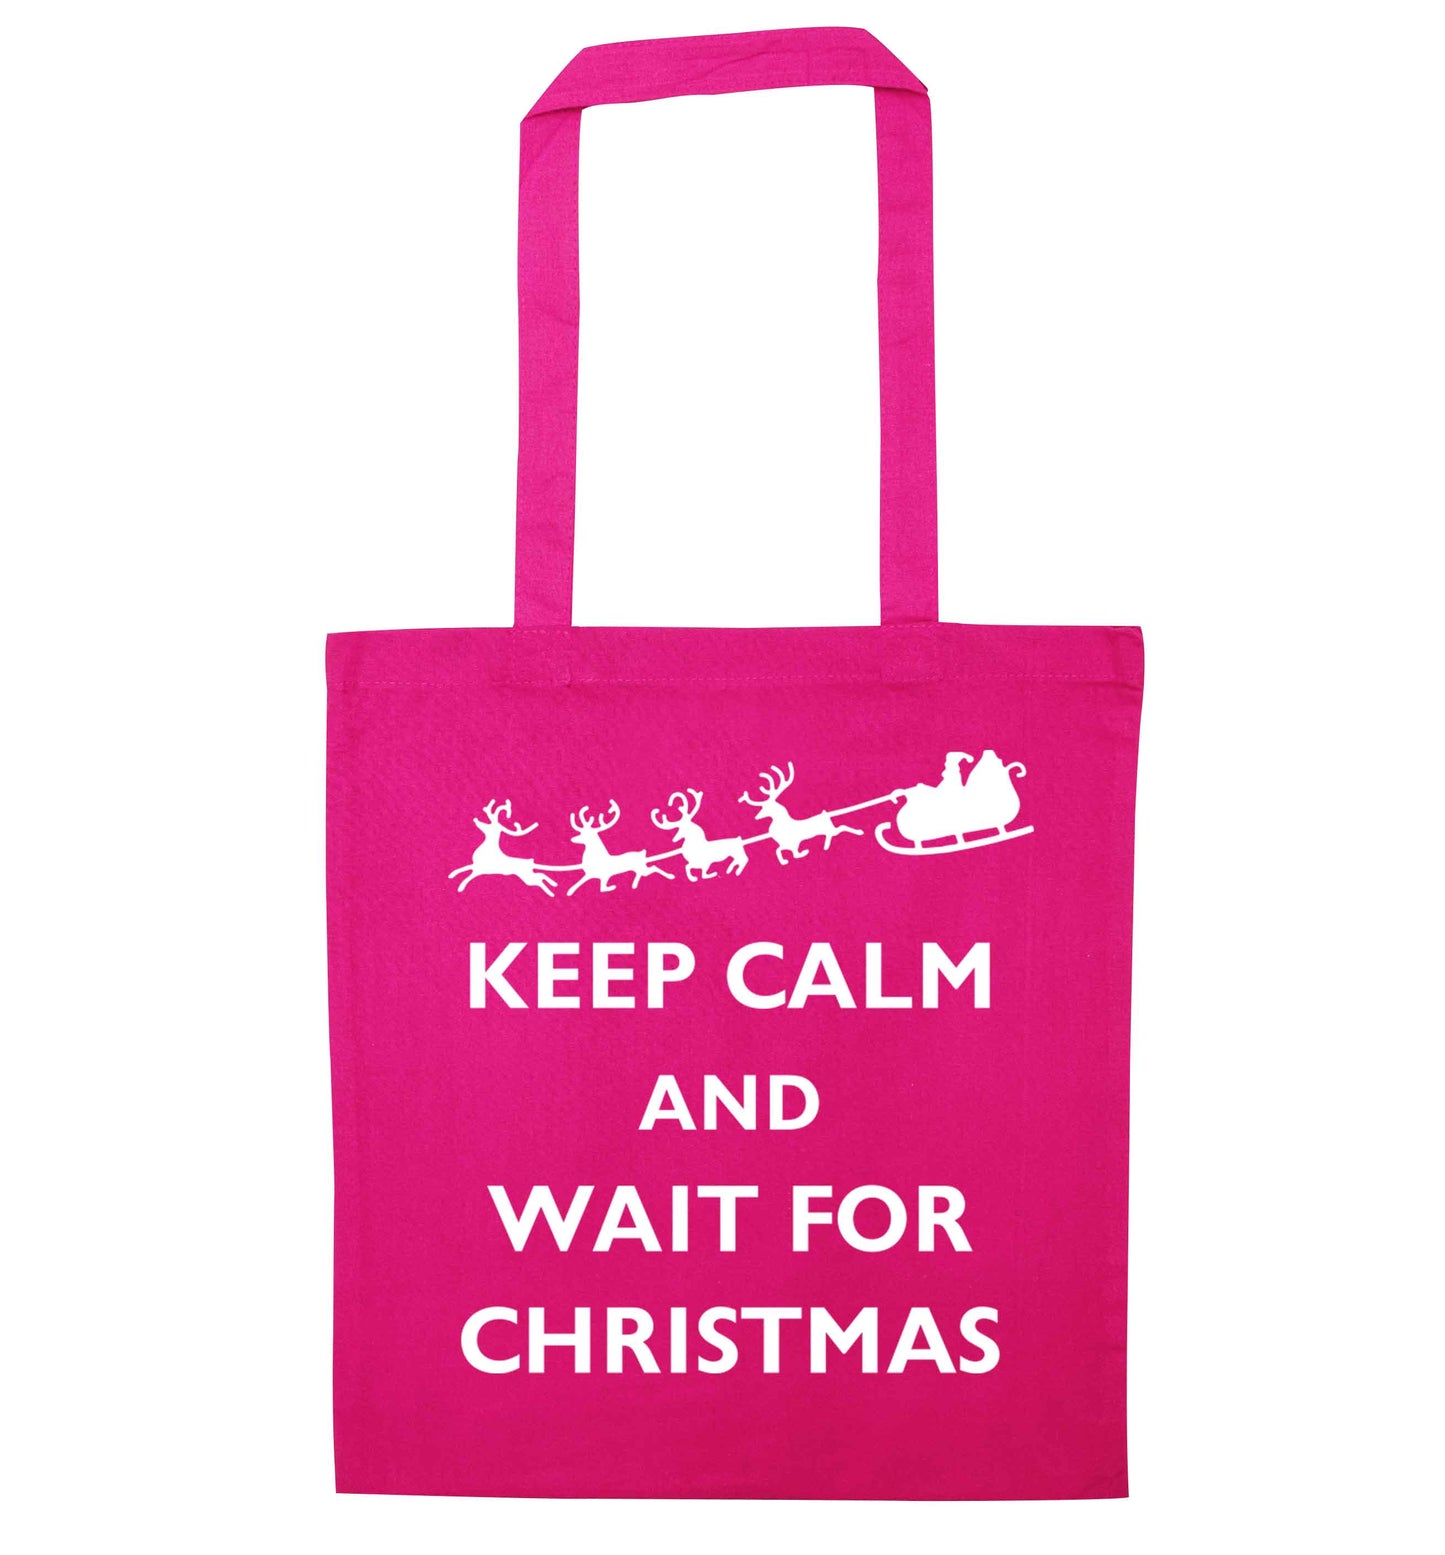 Keep calm and wait for Christmas pink tote bag